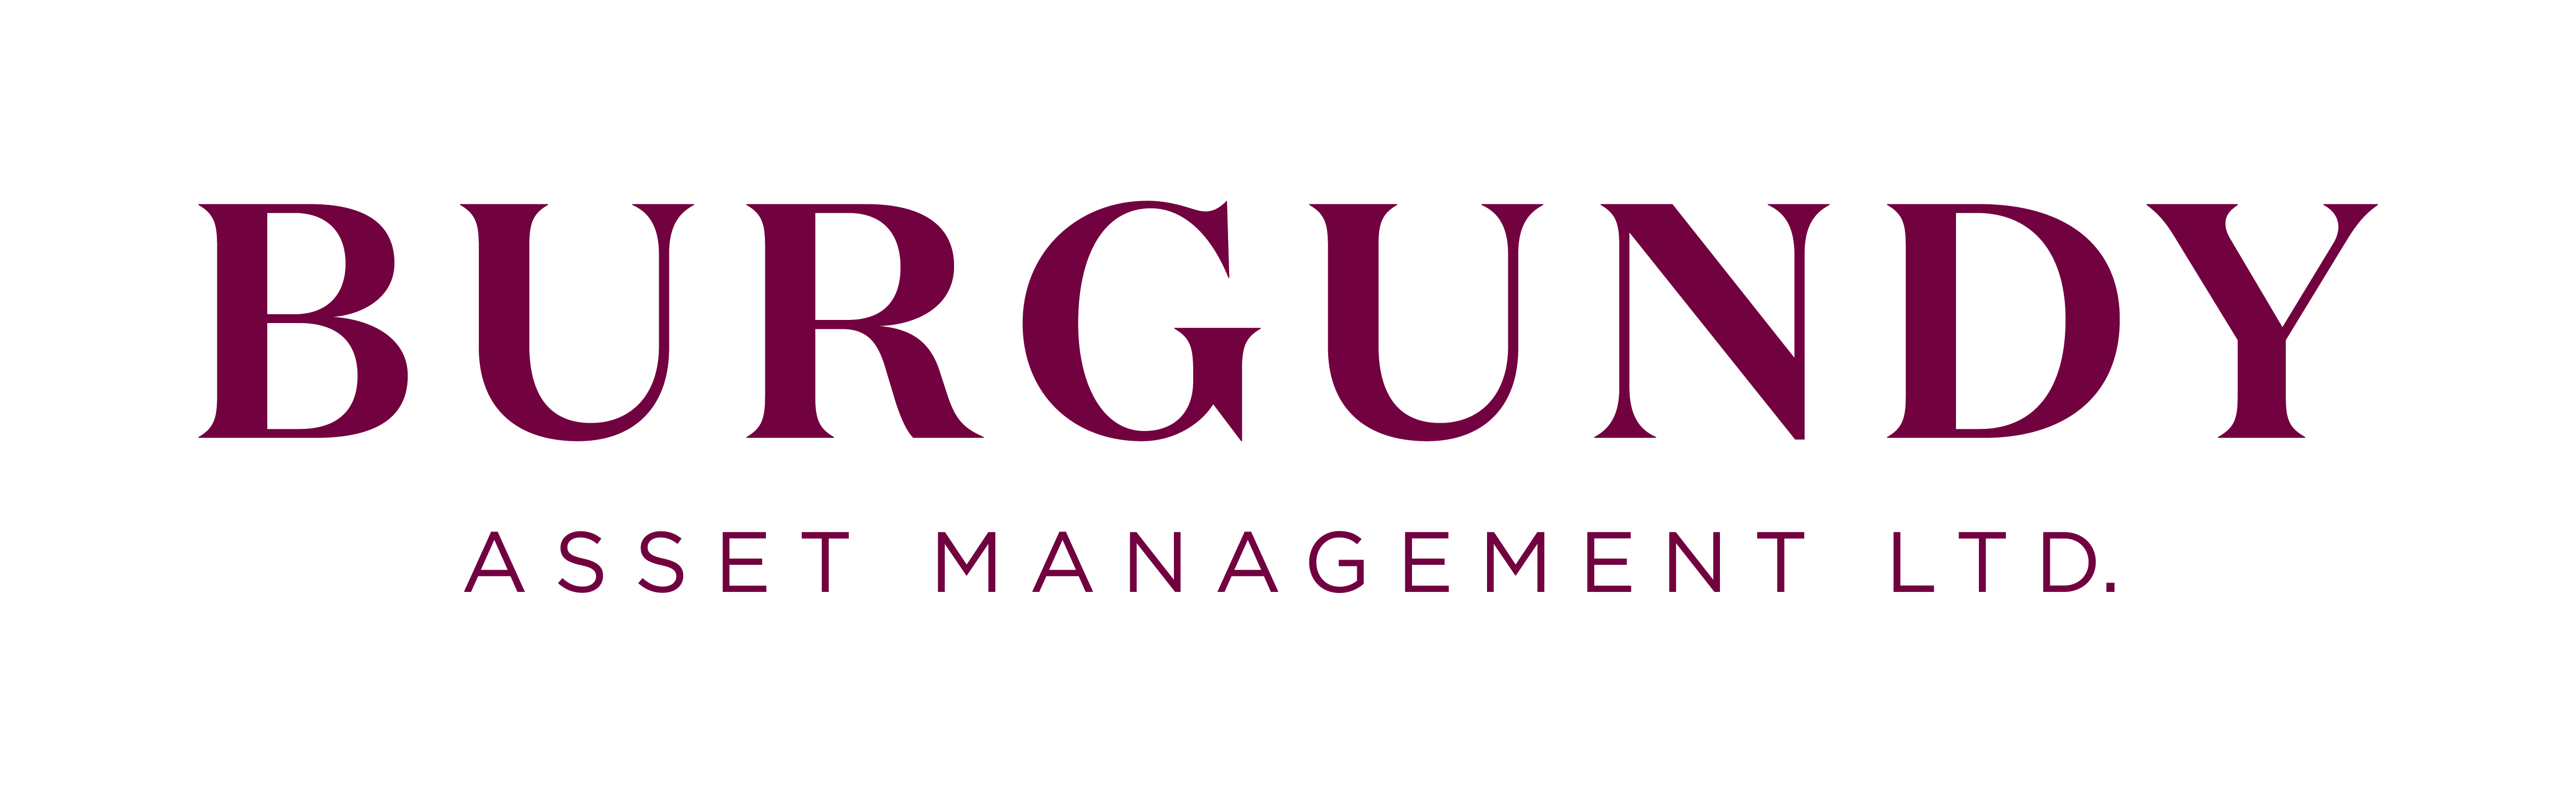 Burgundy Asset
Management Ltd.